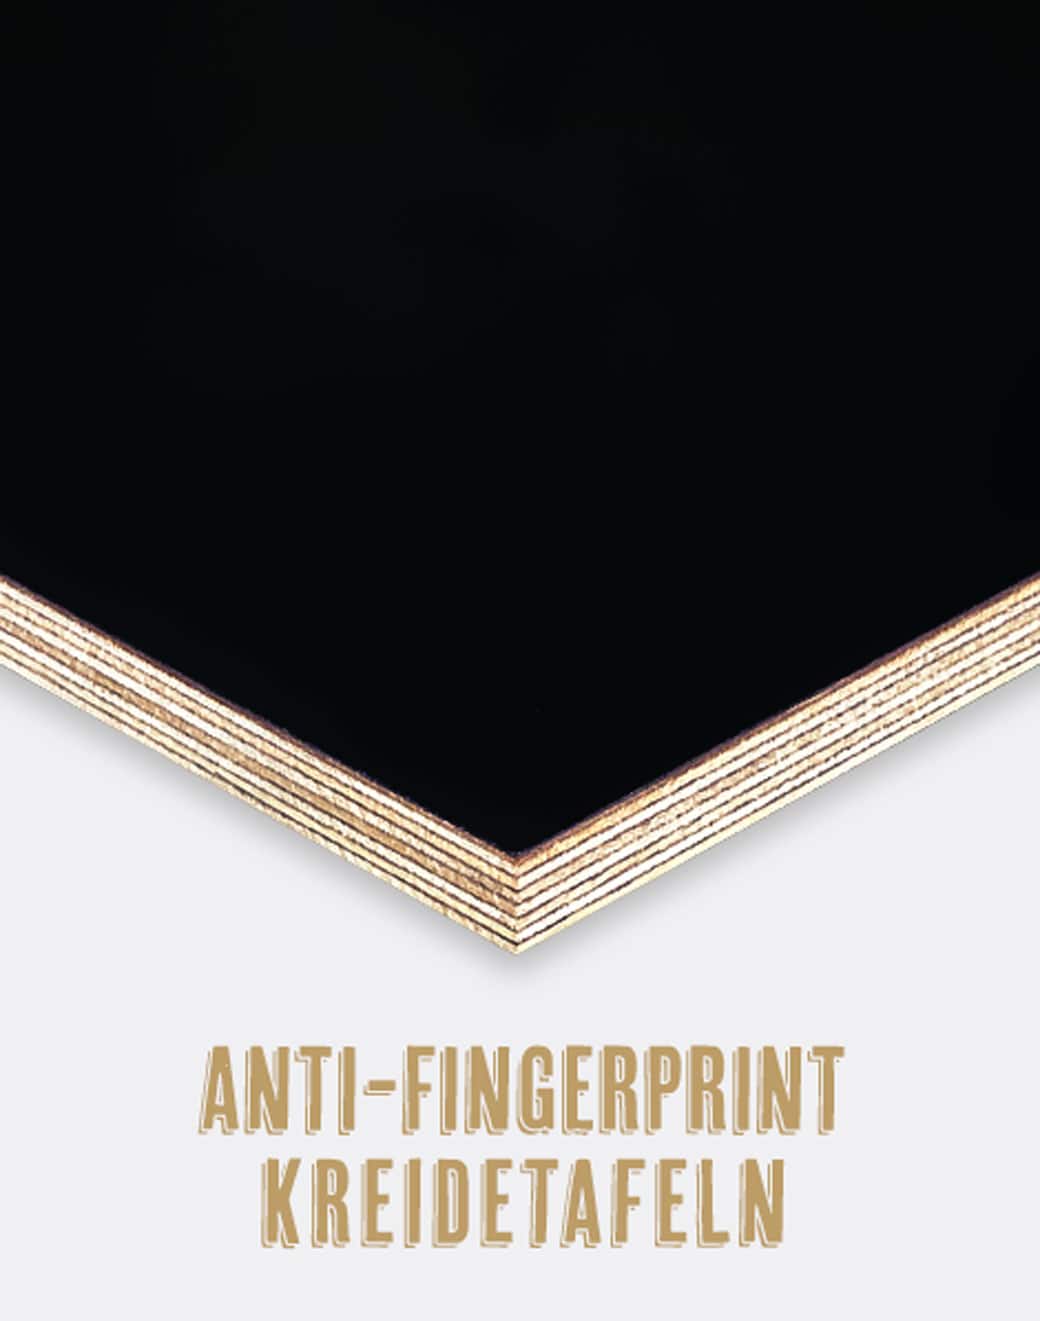 Hochwertige Kreidetafel mit Anti-Fingerprint-Effekt